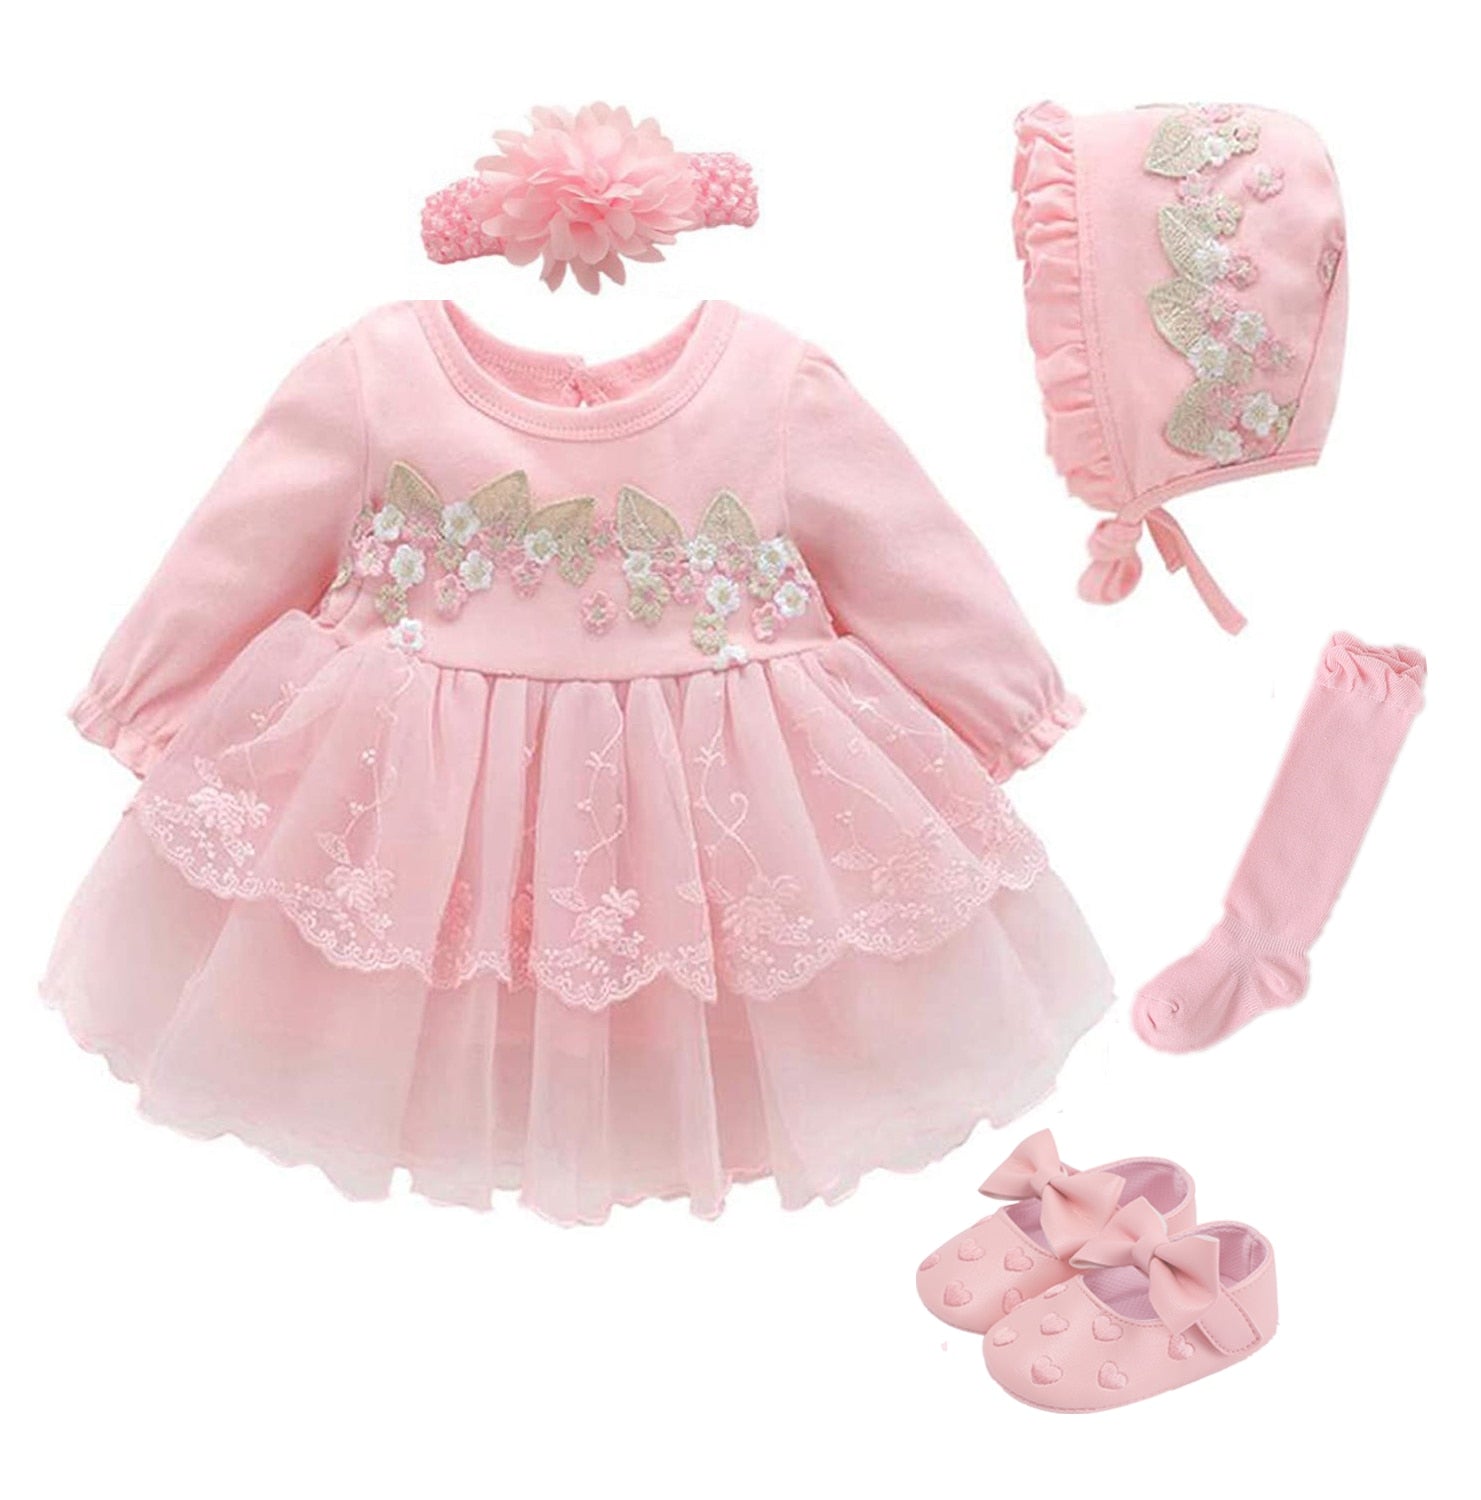 Buy Knitting Pattern, Baby Girl Dress, 0-3 Months Baby, 17-22 Reborn Doll,  PDF Digital Download Online in India - Etsy